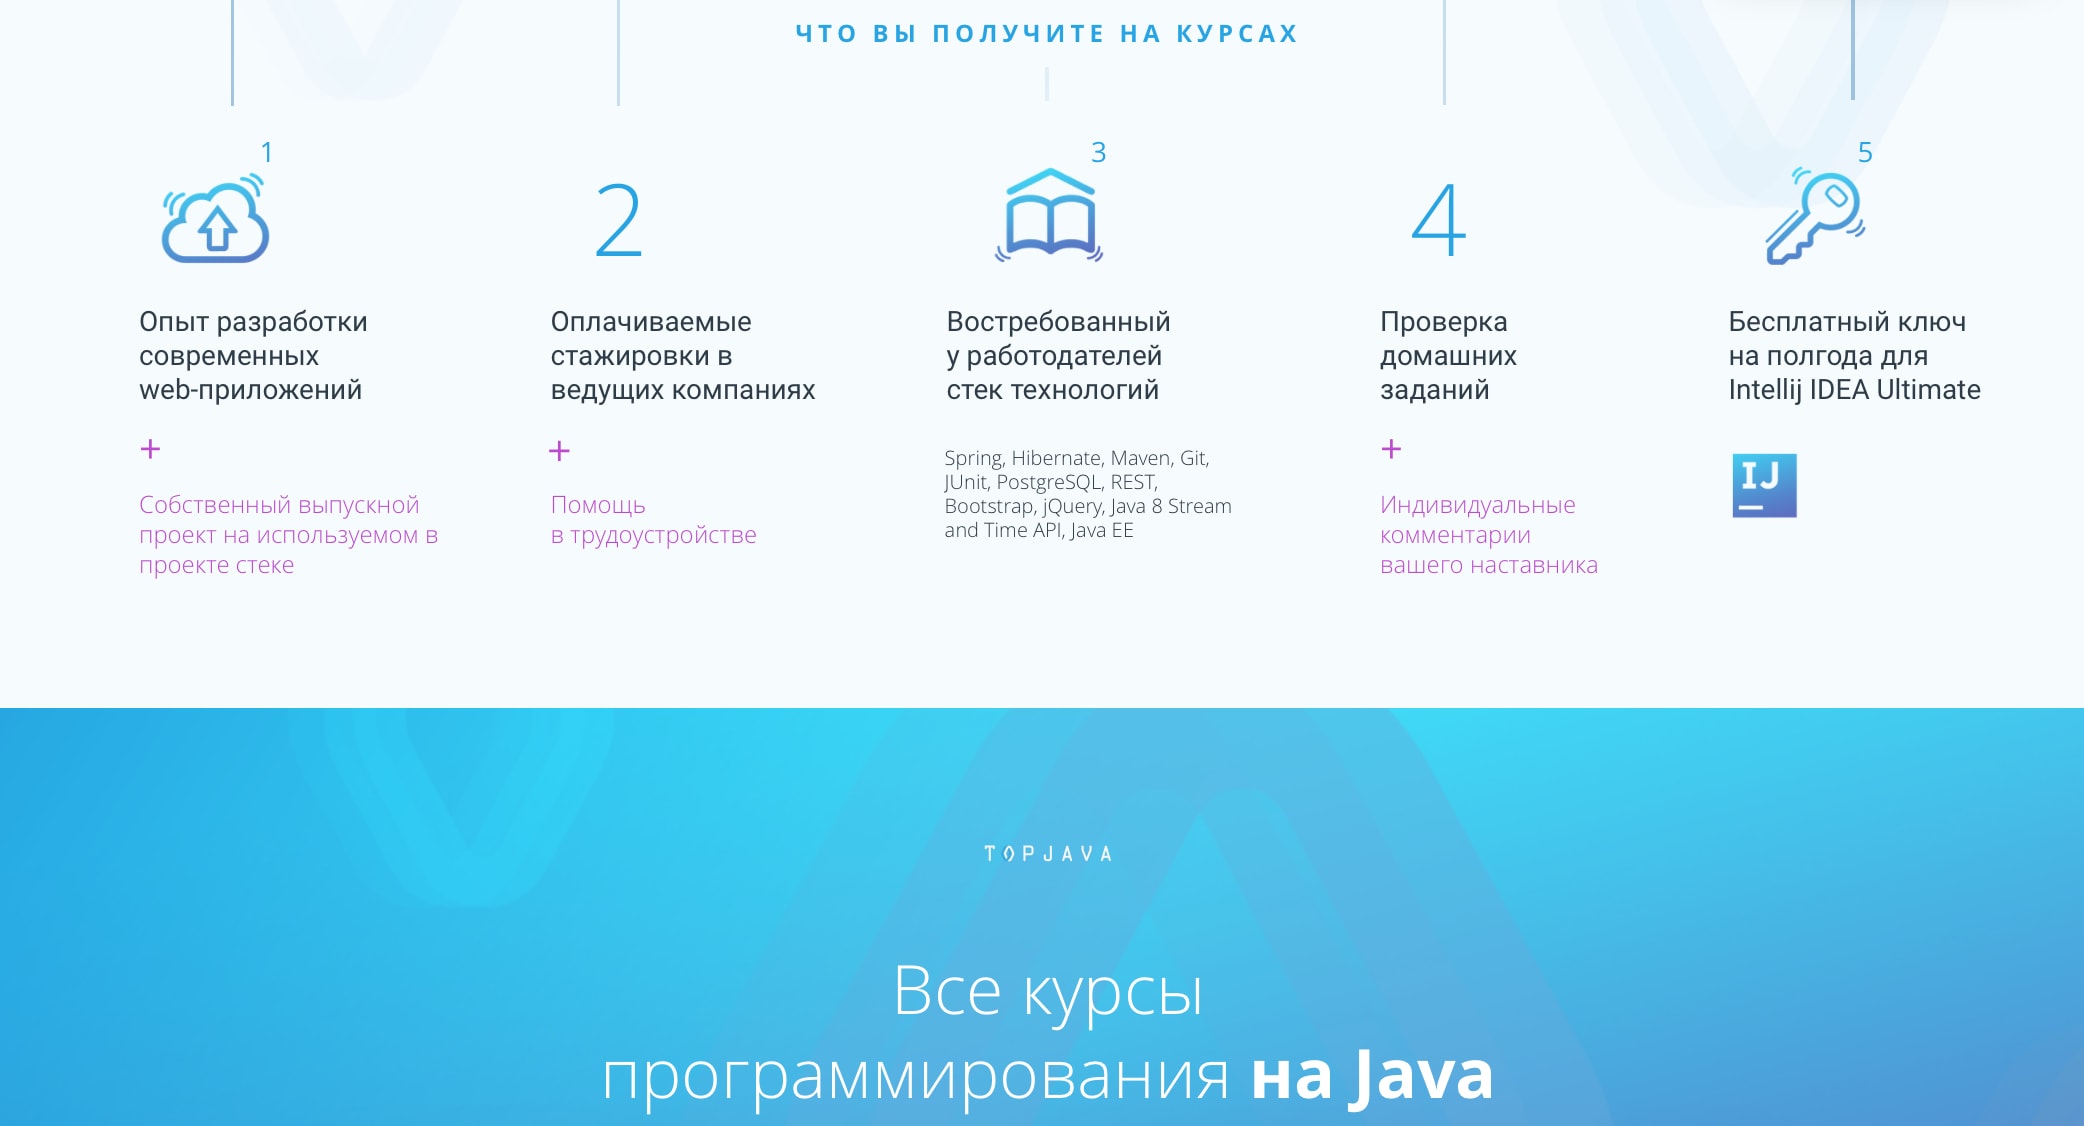 TOPJAVA.ru, скриншот интерфейса 3